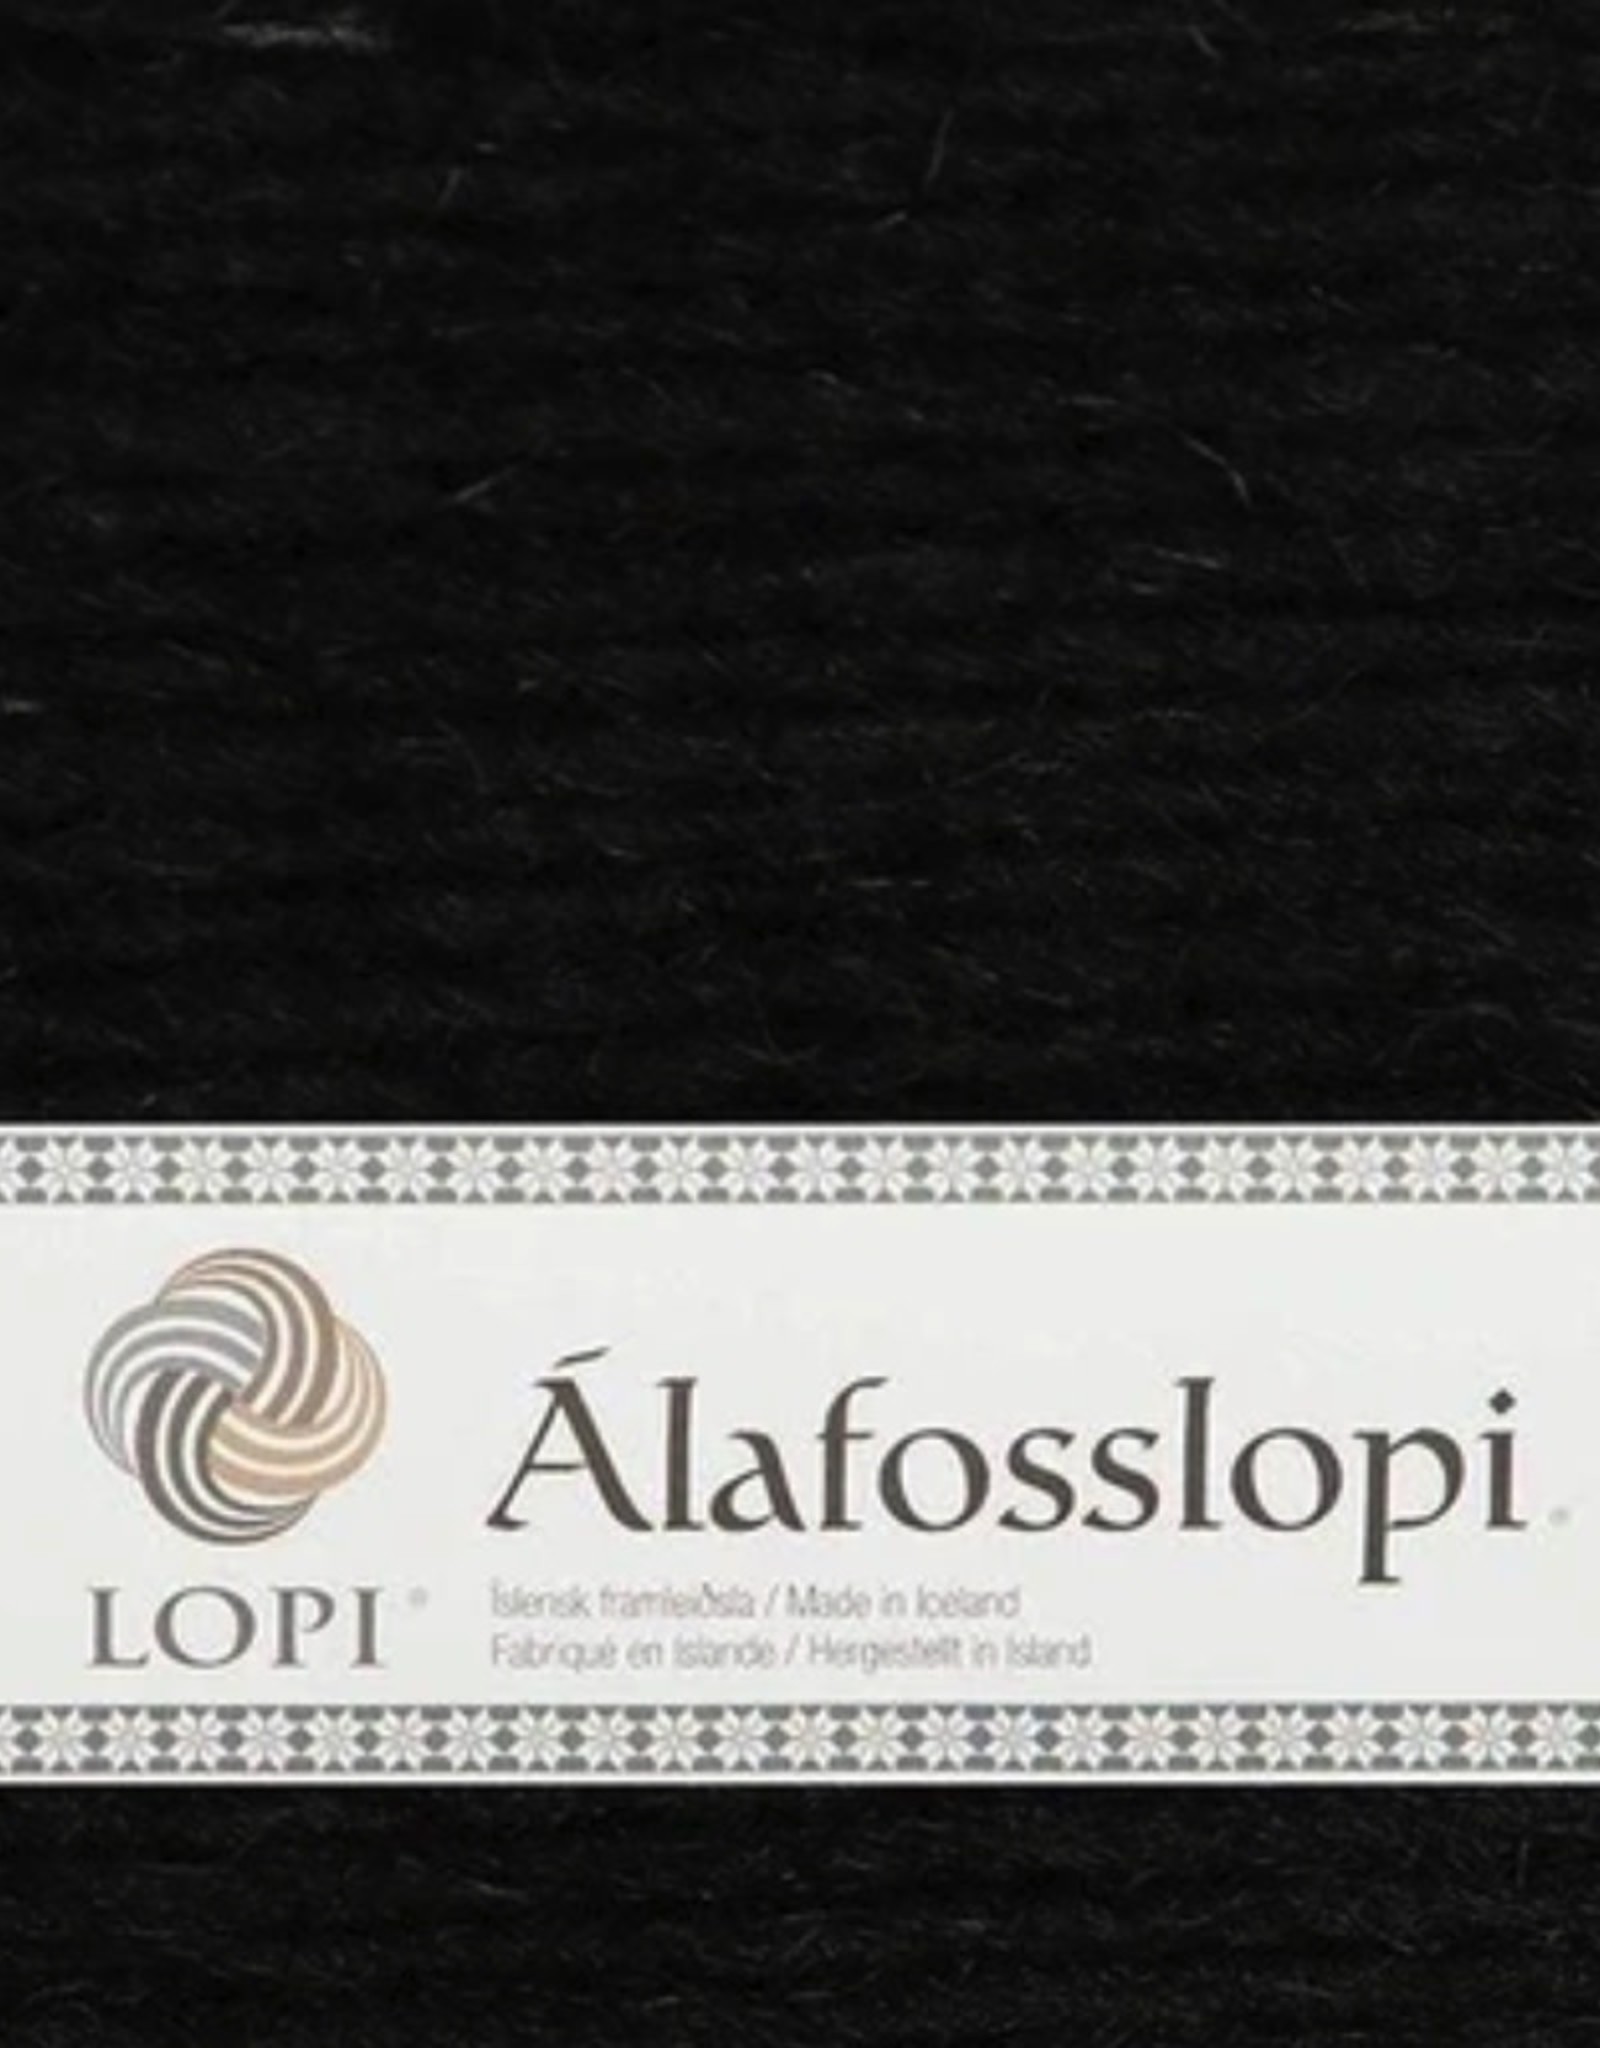 Lopi Alafosslopi